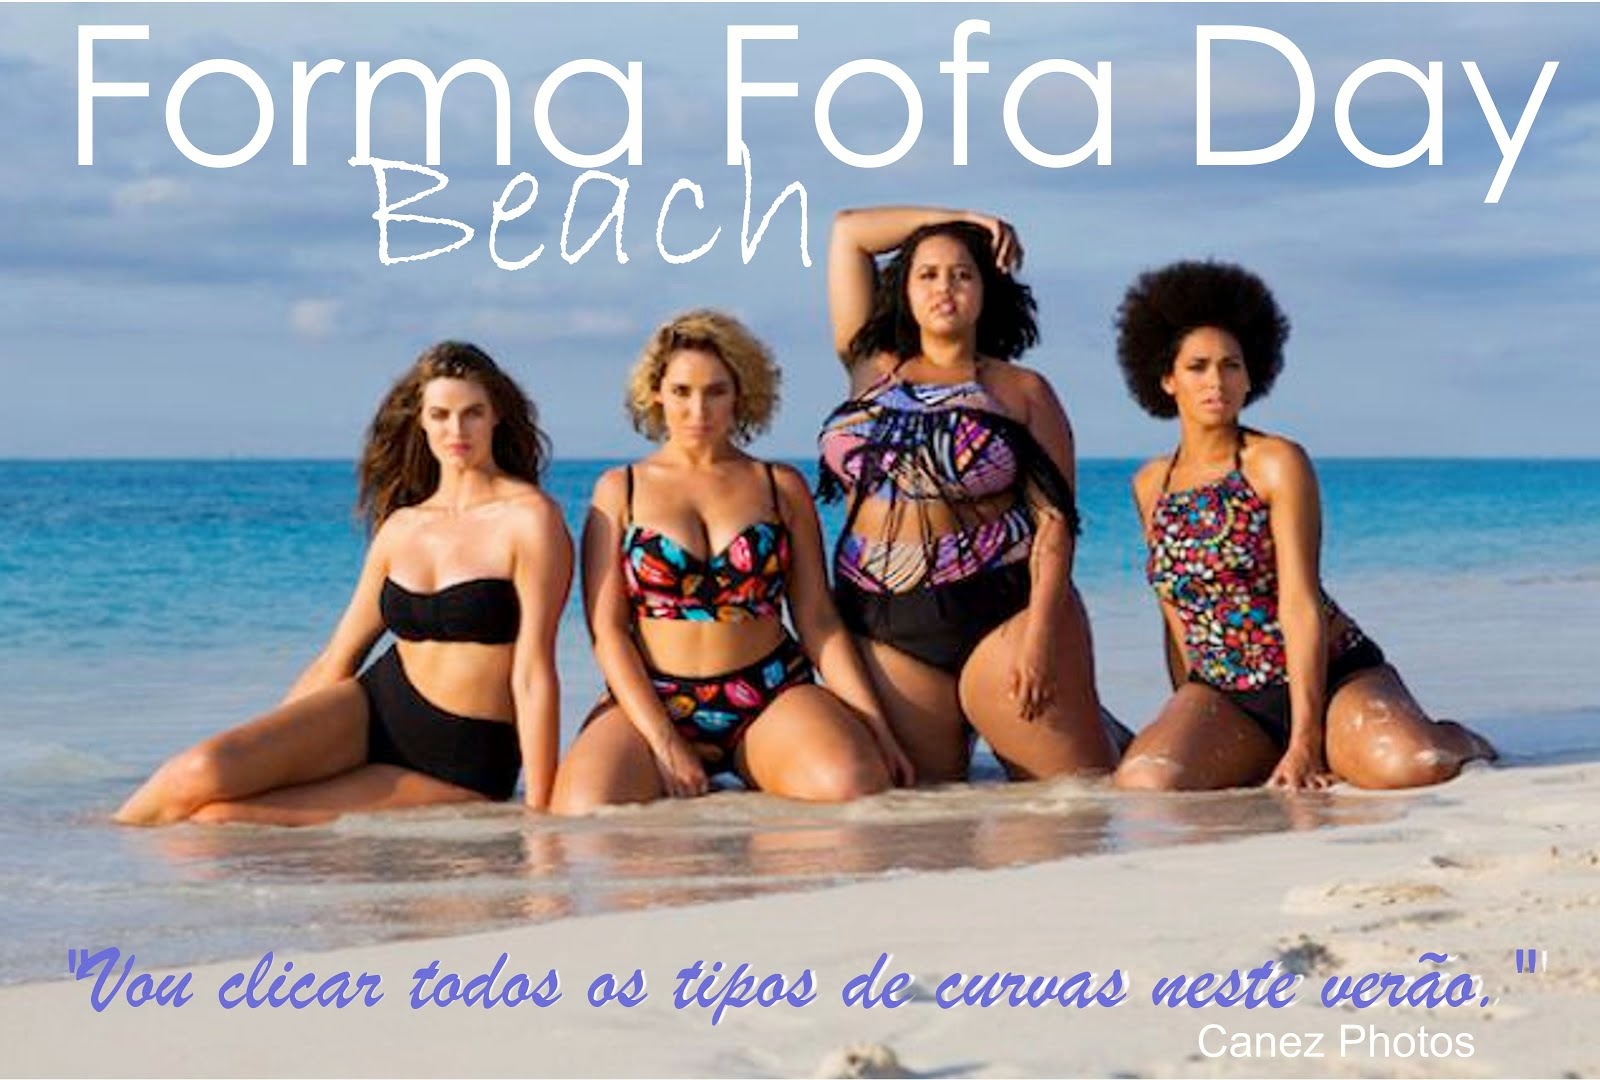 Forma Fofa Day Beach